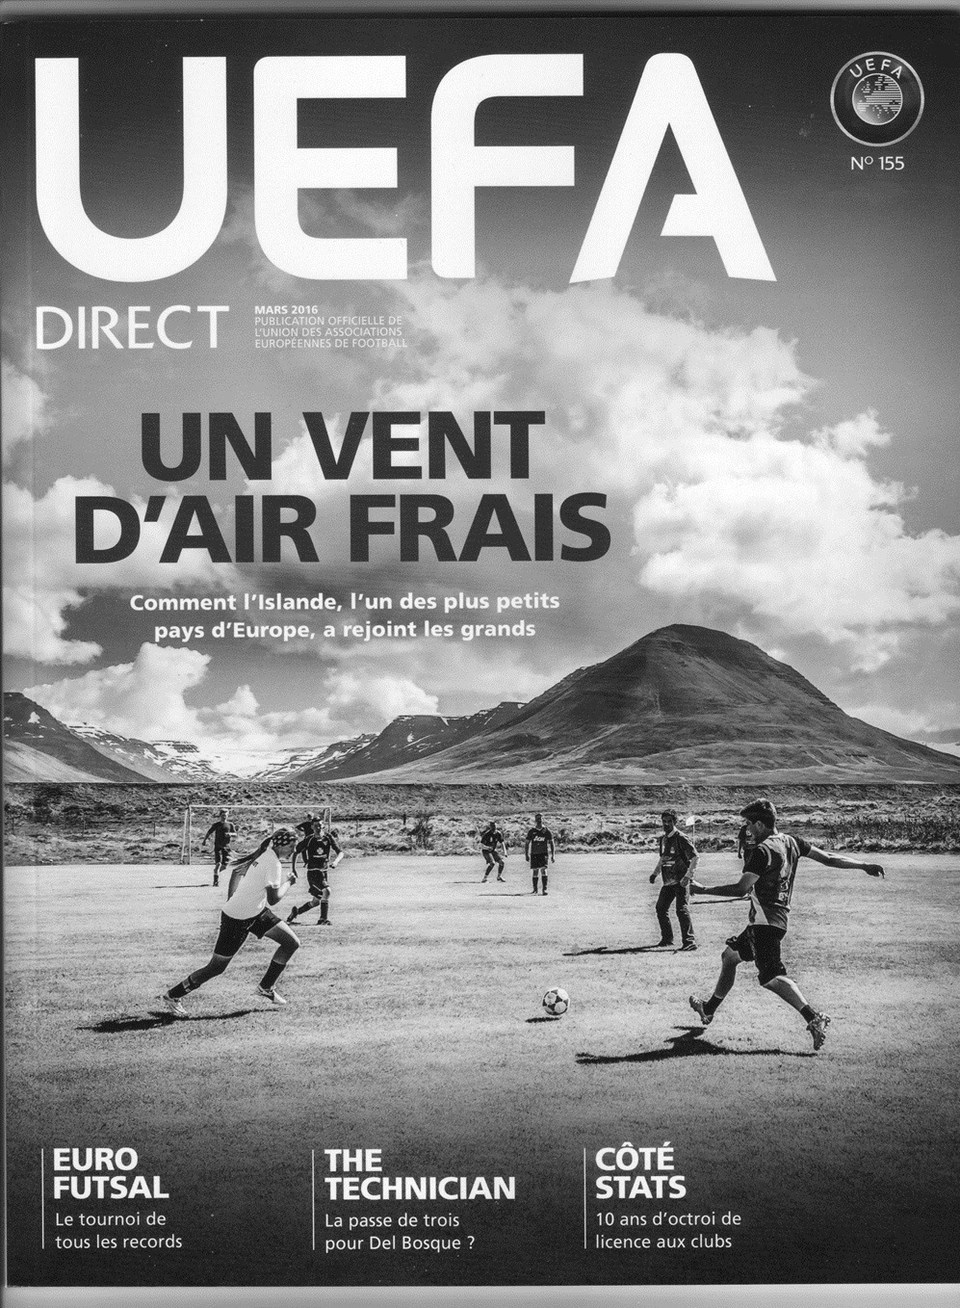 Arda Turan, UEFA'nın "ırkçılığa hayır' sayfasında - 2